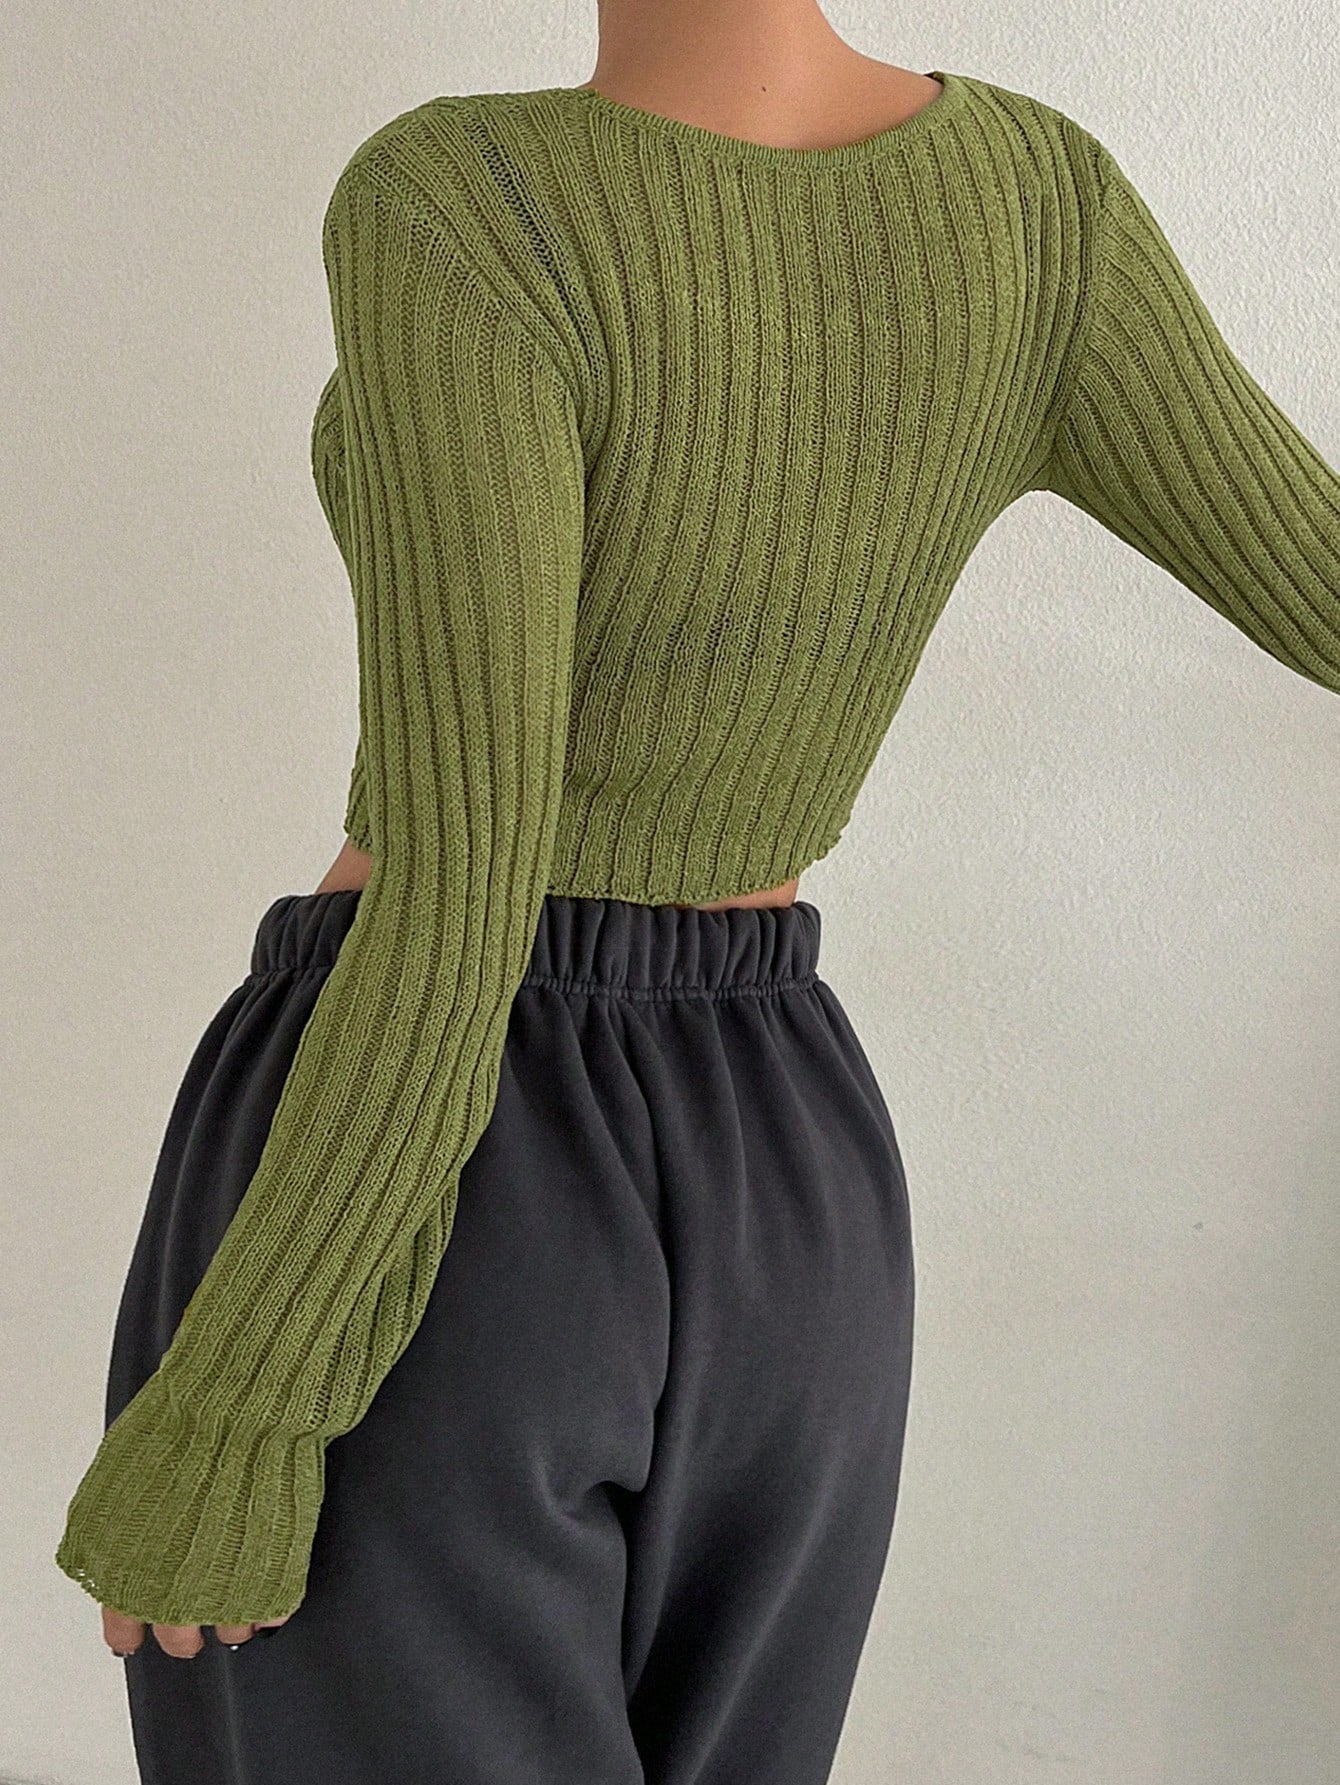 Women's Solid Color Half Sleeve Crop Top Cardigan With Tie Front